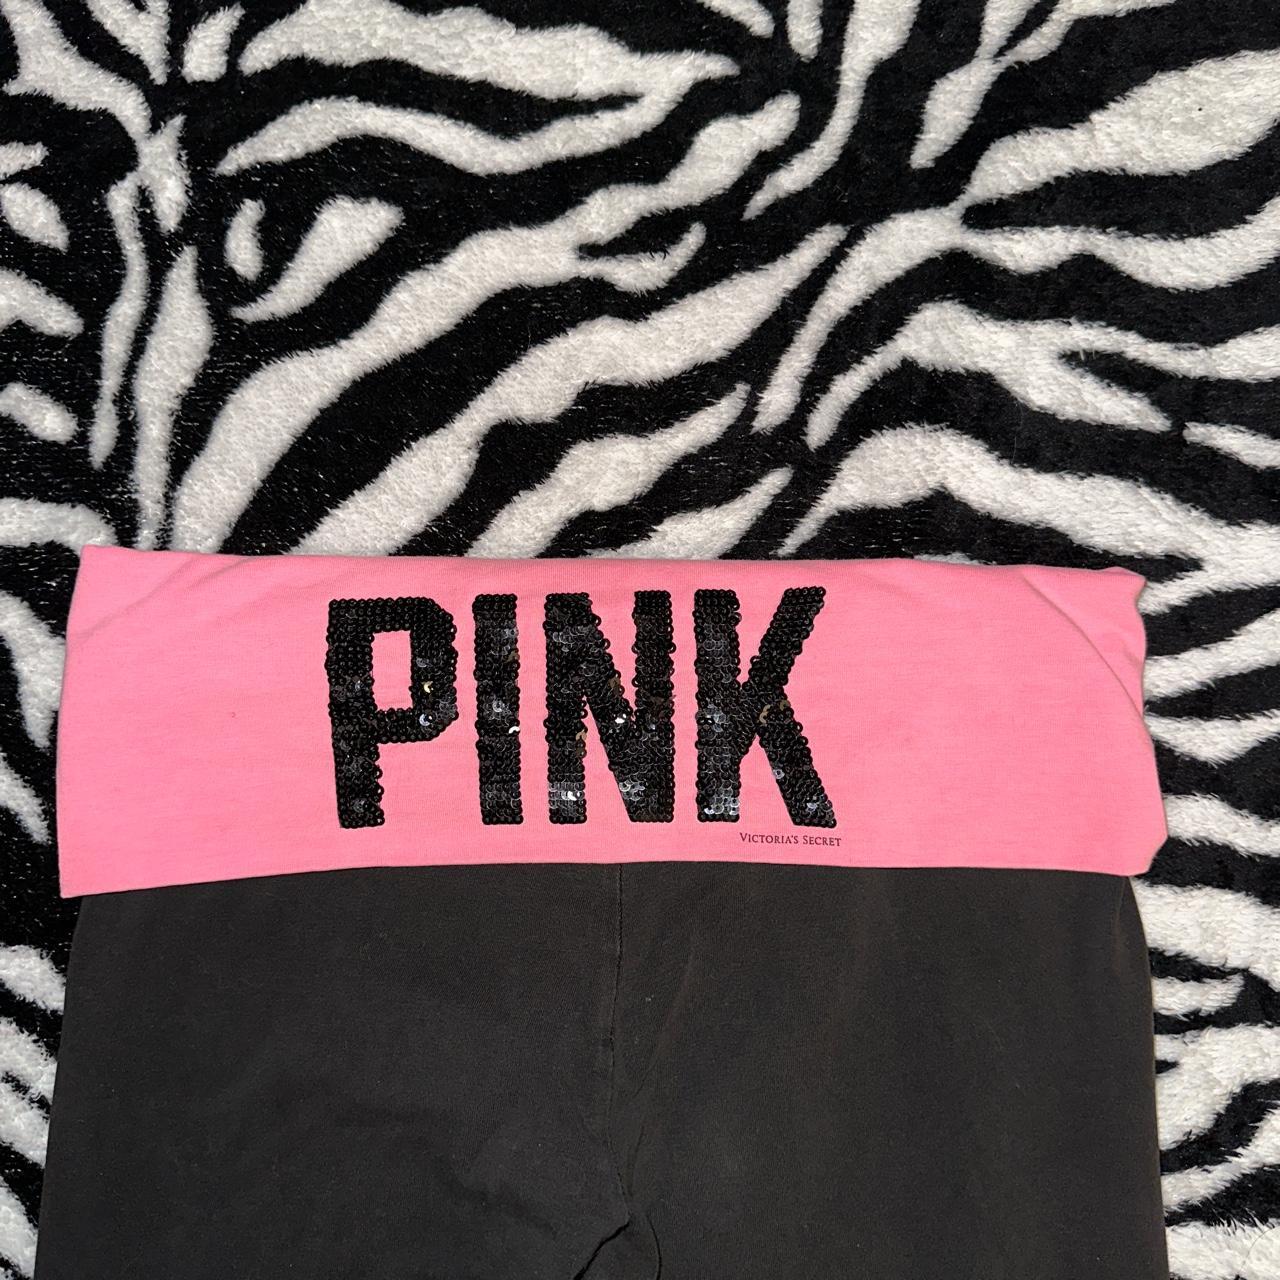 Victoria's Secret Pink foldover yoga shorts